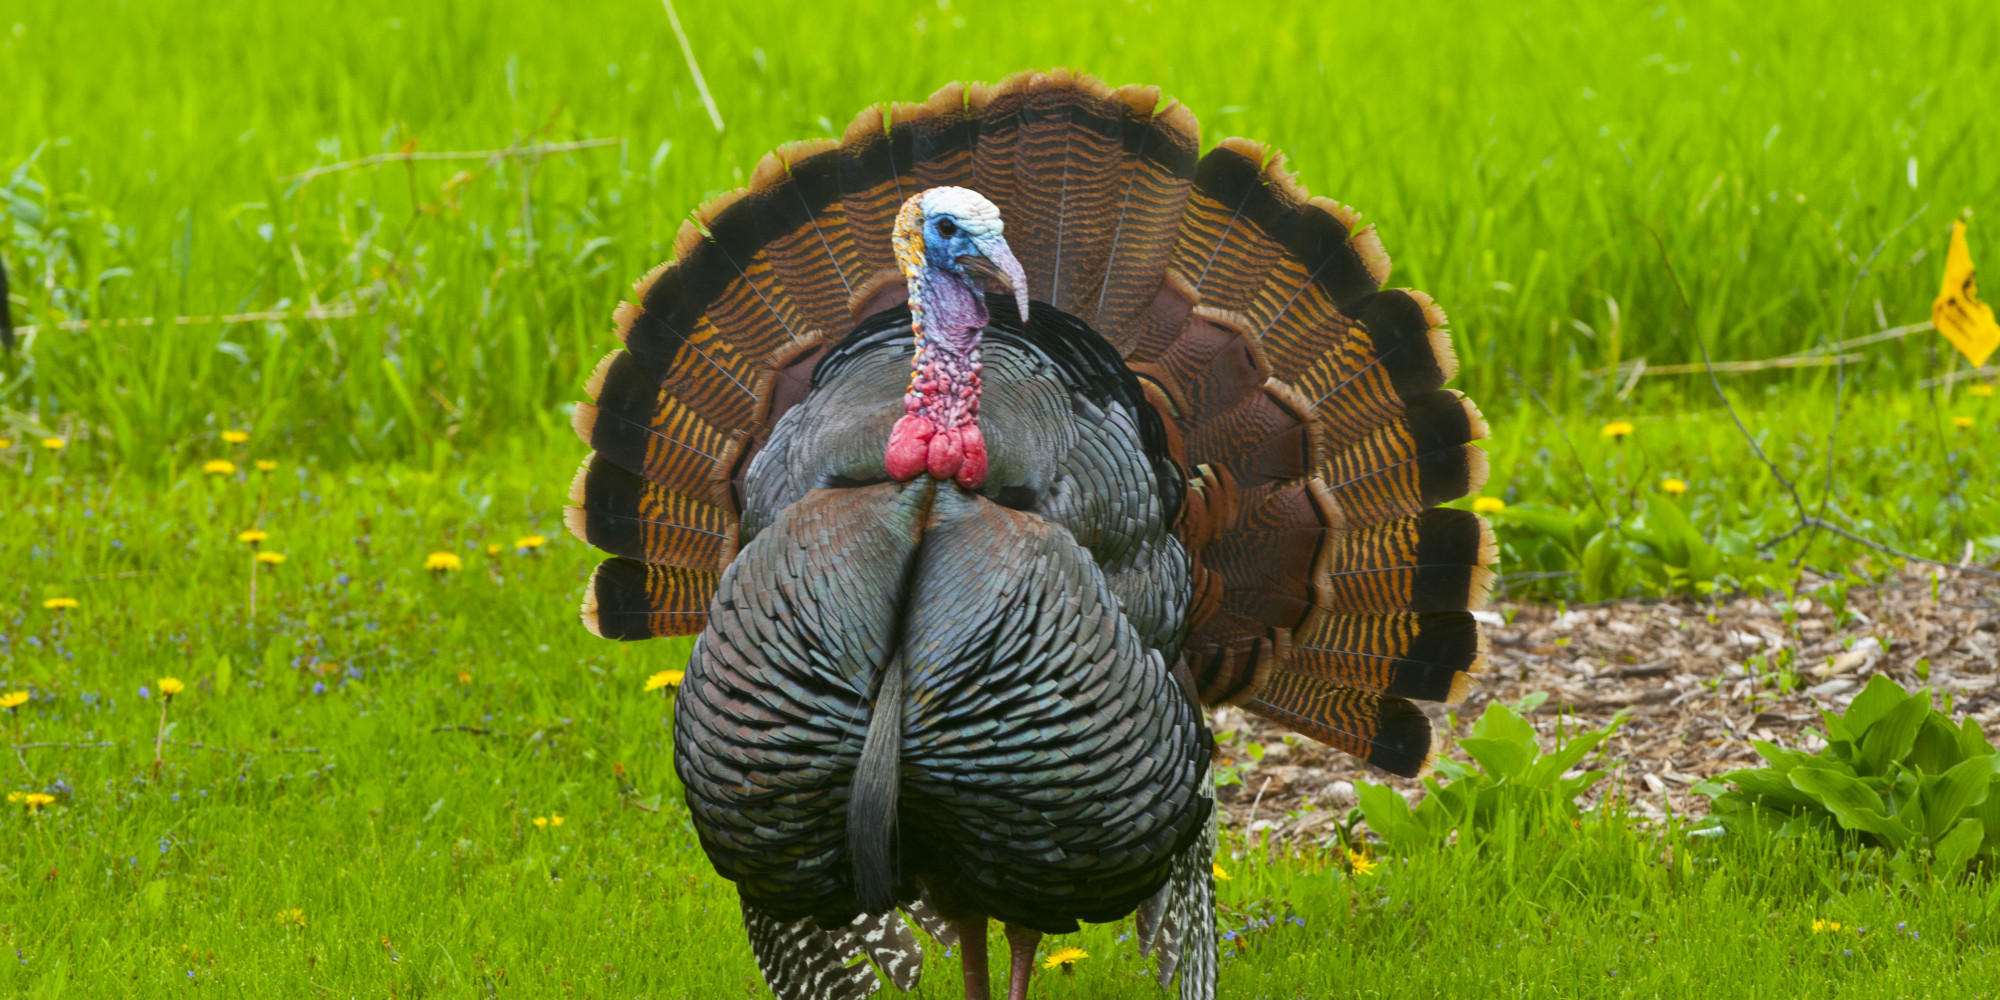 Thanksgiving Turkey Photos
 A Feast Ways To Support Humane Treatment Turkeys